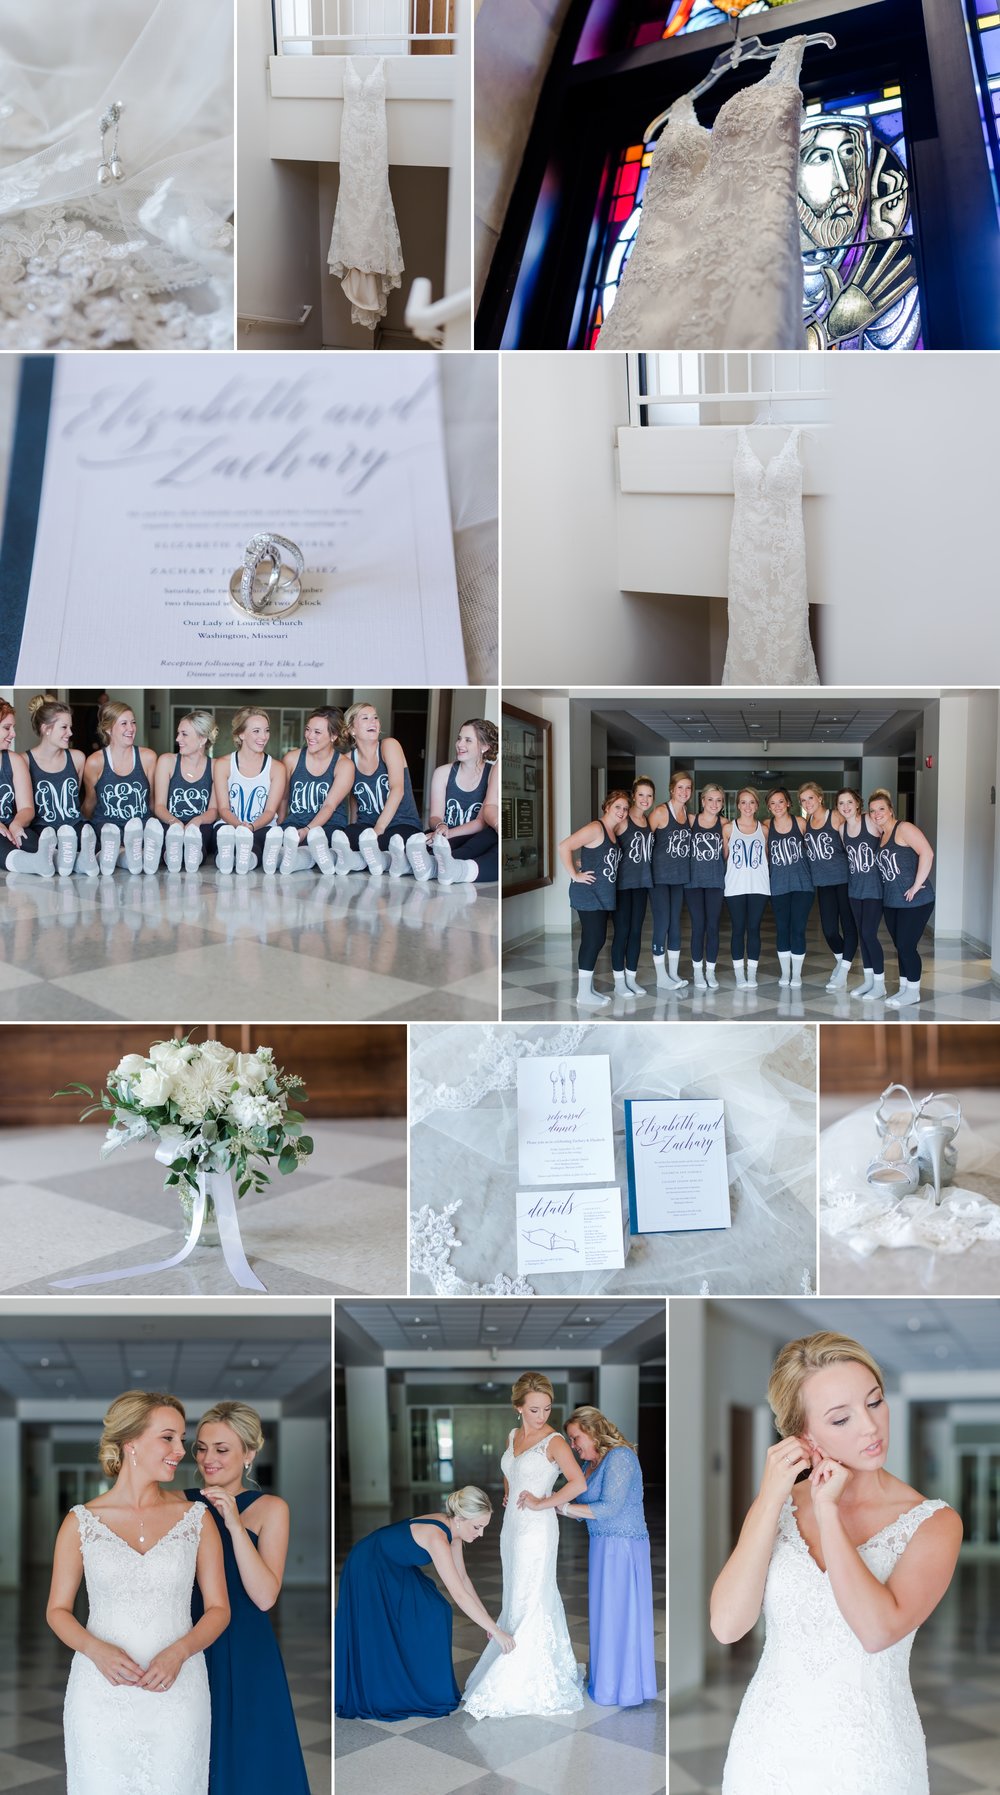  wedding_photography_reception_navy_gold_bridesmaids_bridal_prep_details 1 